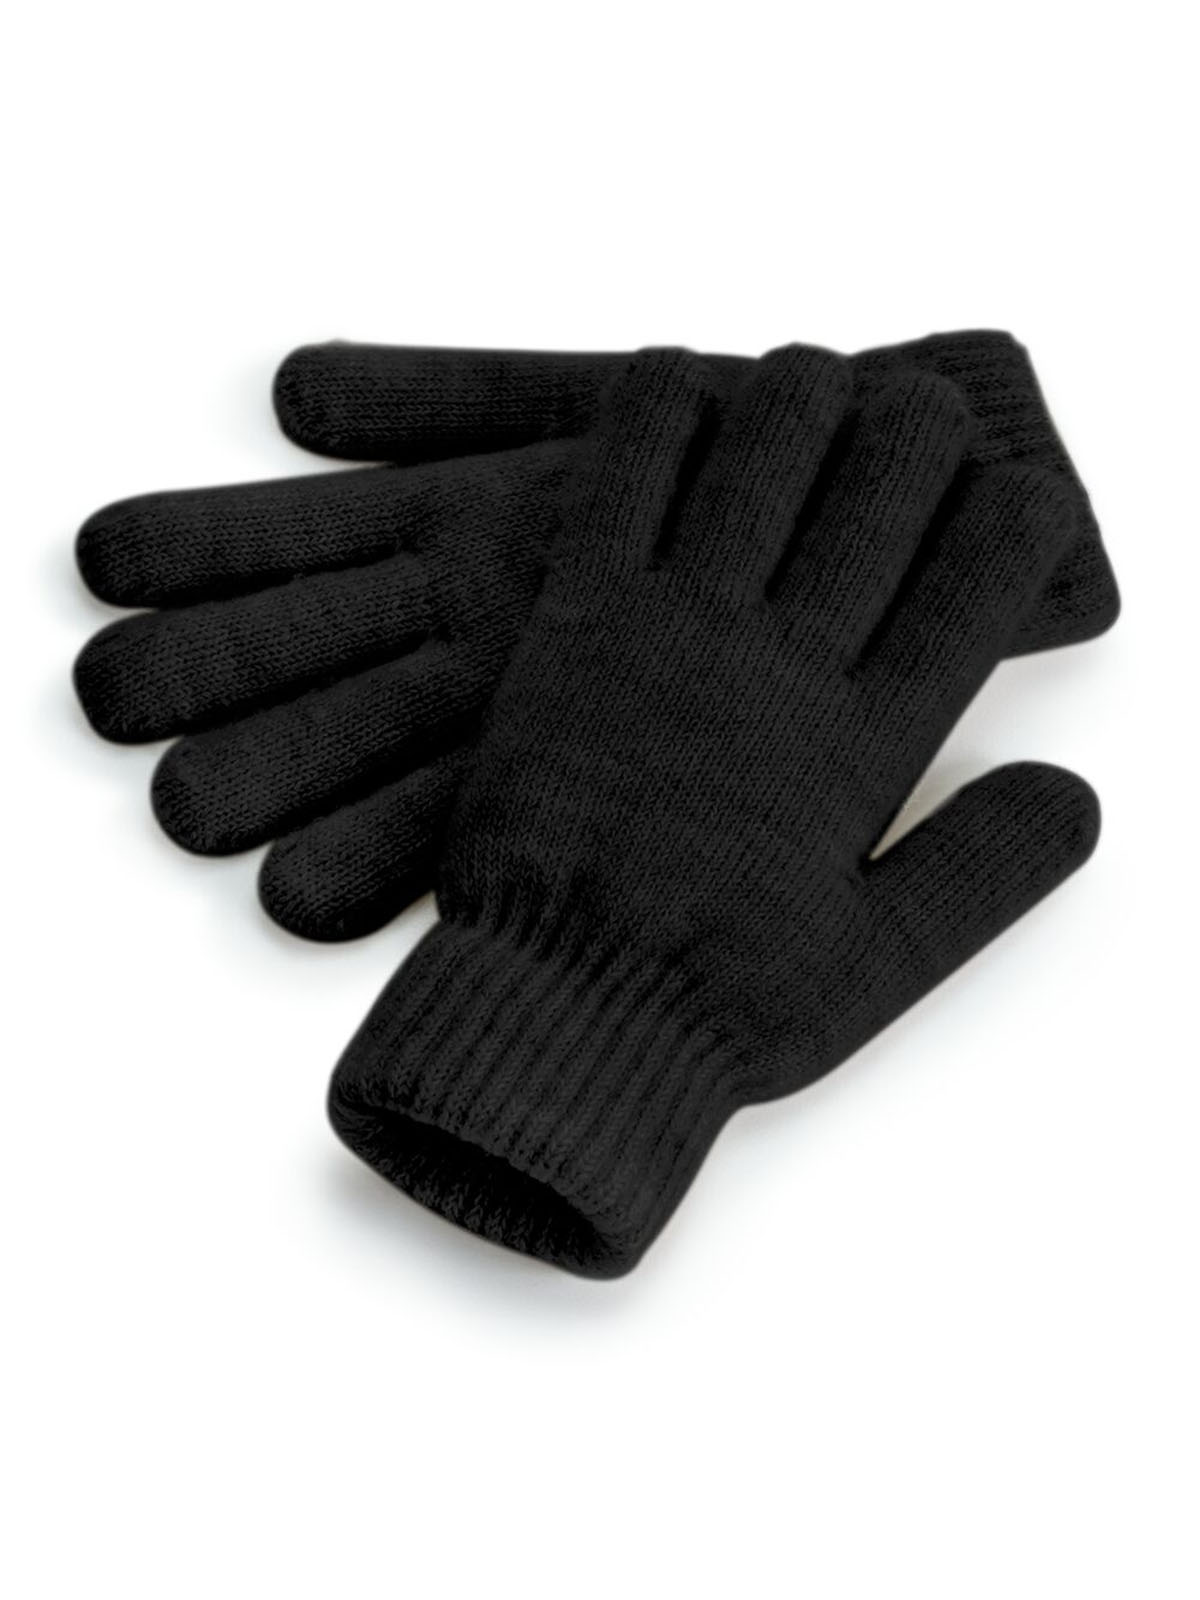 cosy-ribbed-cuff-gloves-black-marl.webp